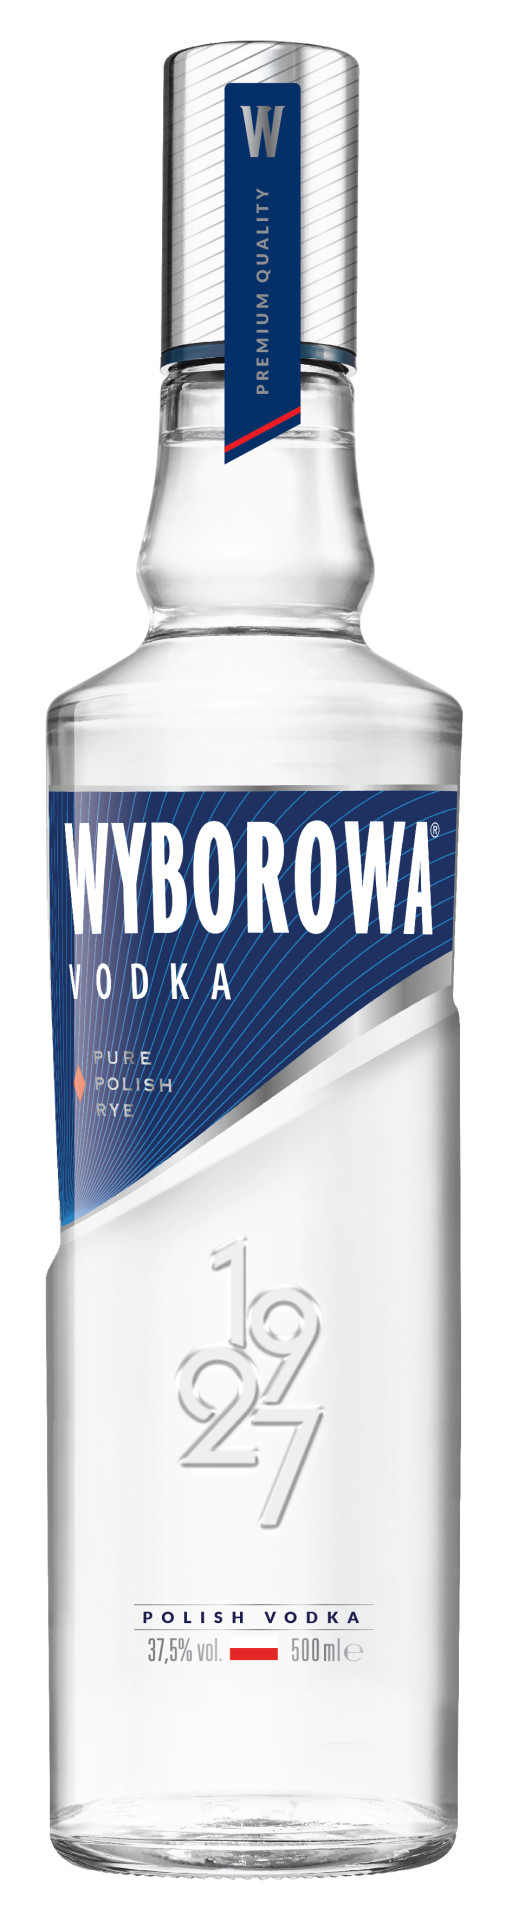 Wyborowa Vodka 0.5l